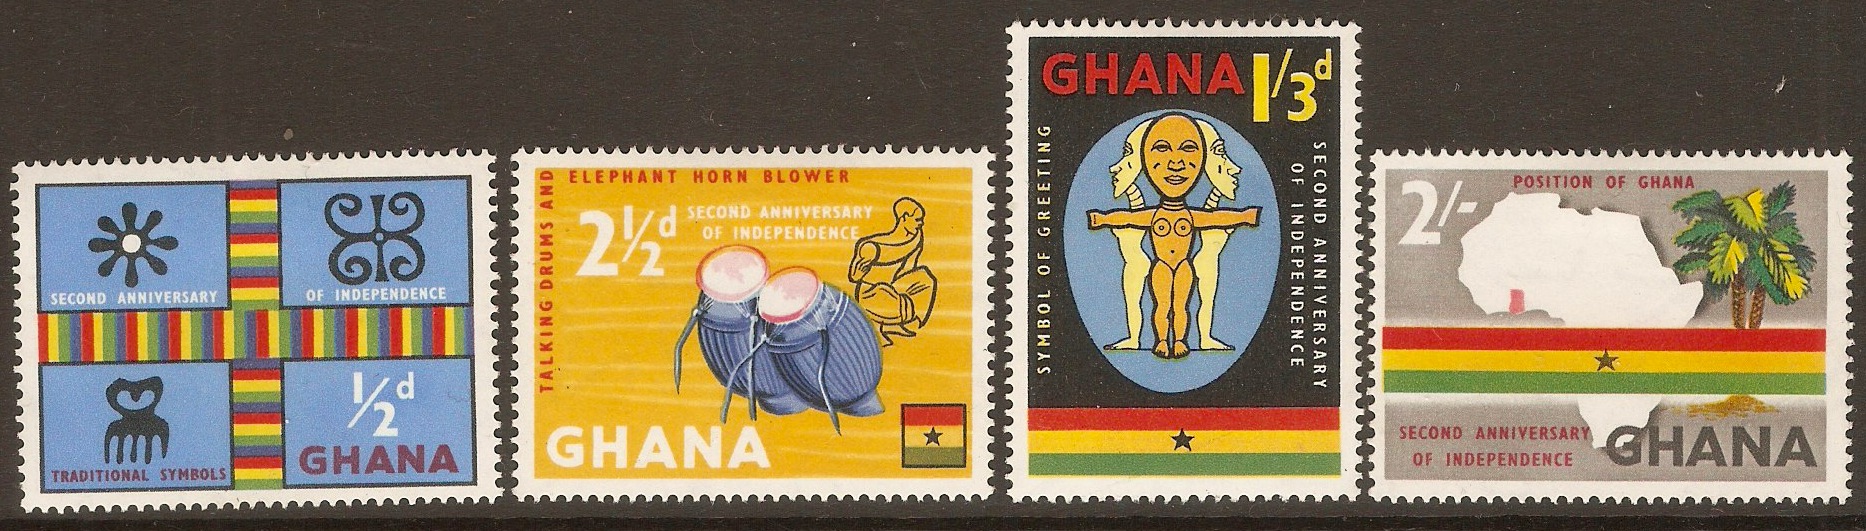 Ghana 1959 Independence Anniversary Set. SG207-SG210.